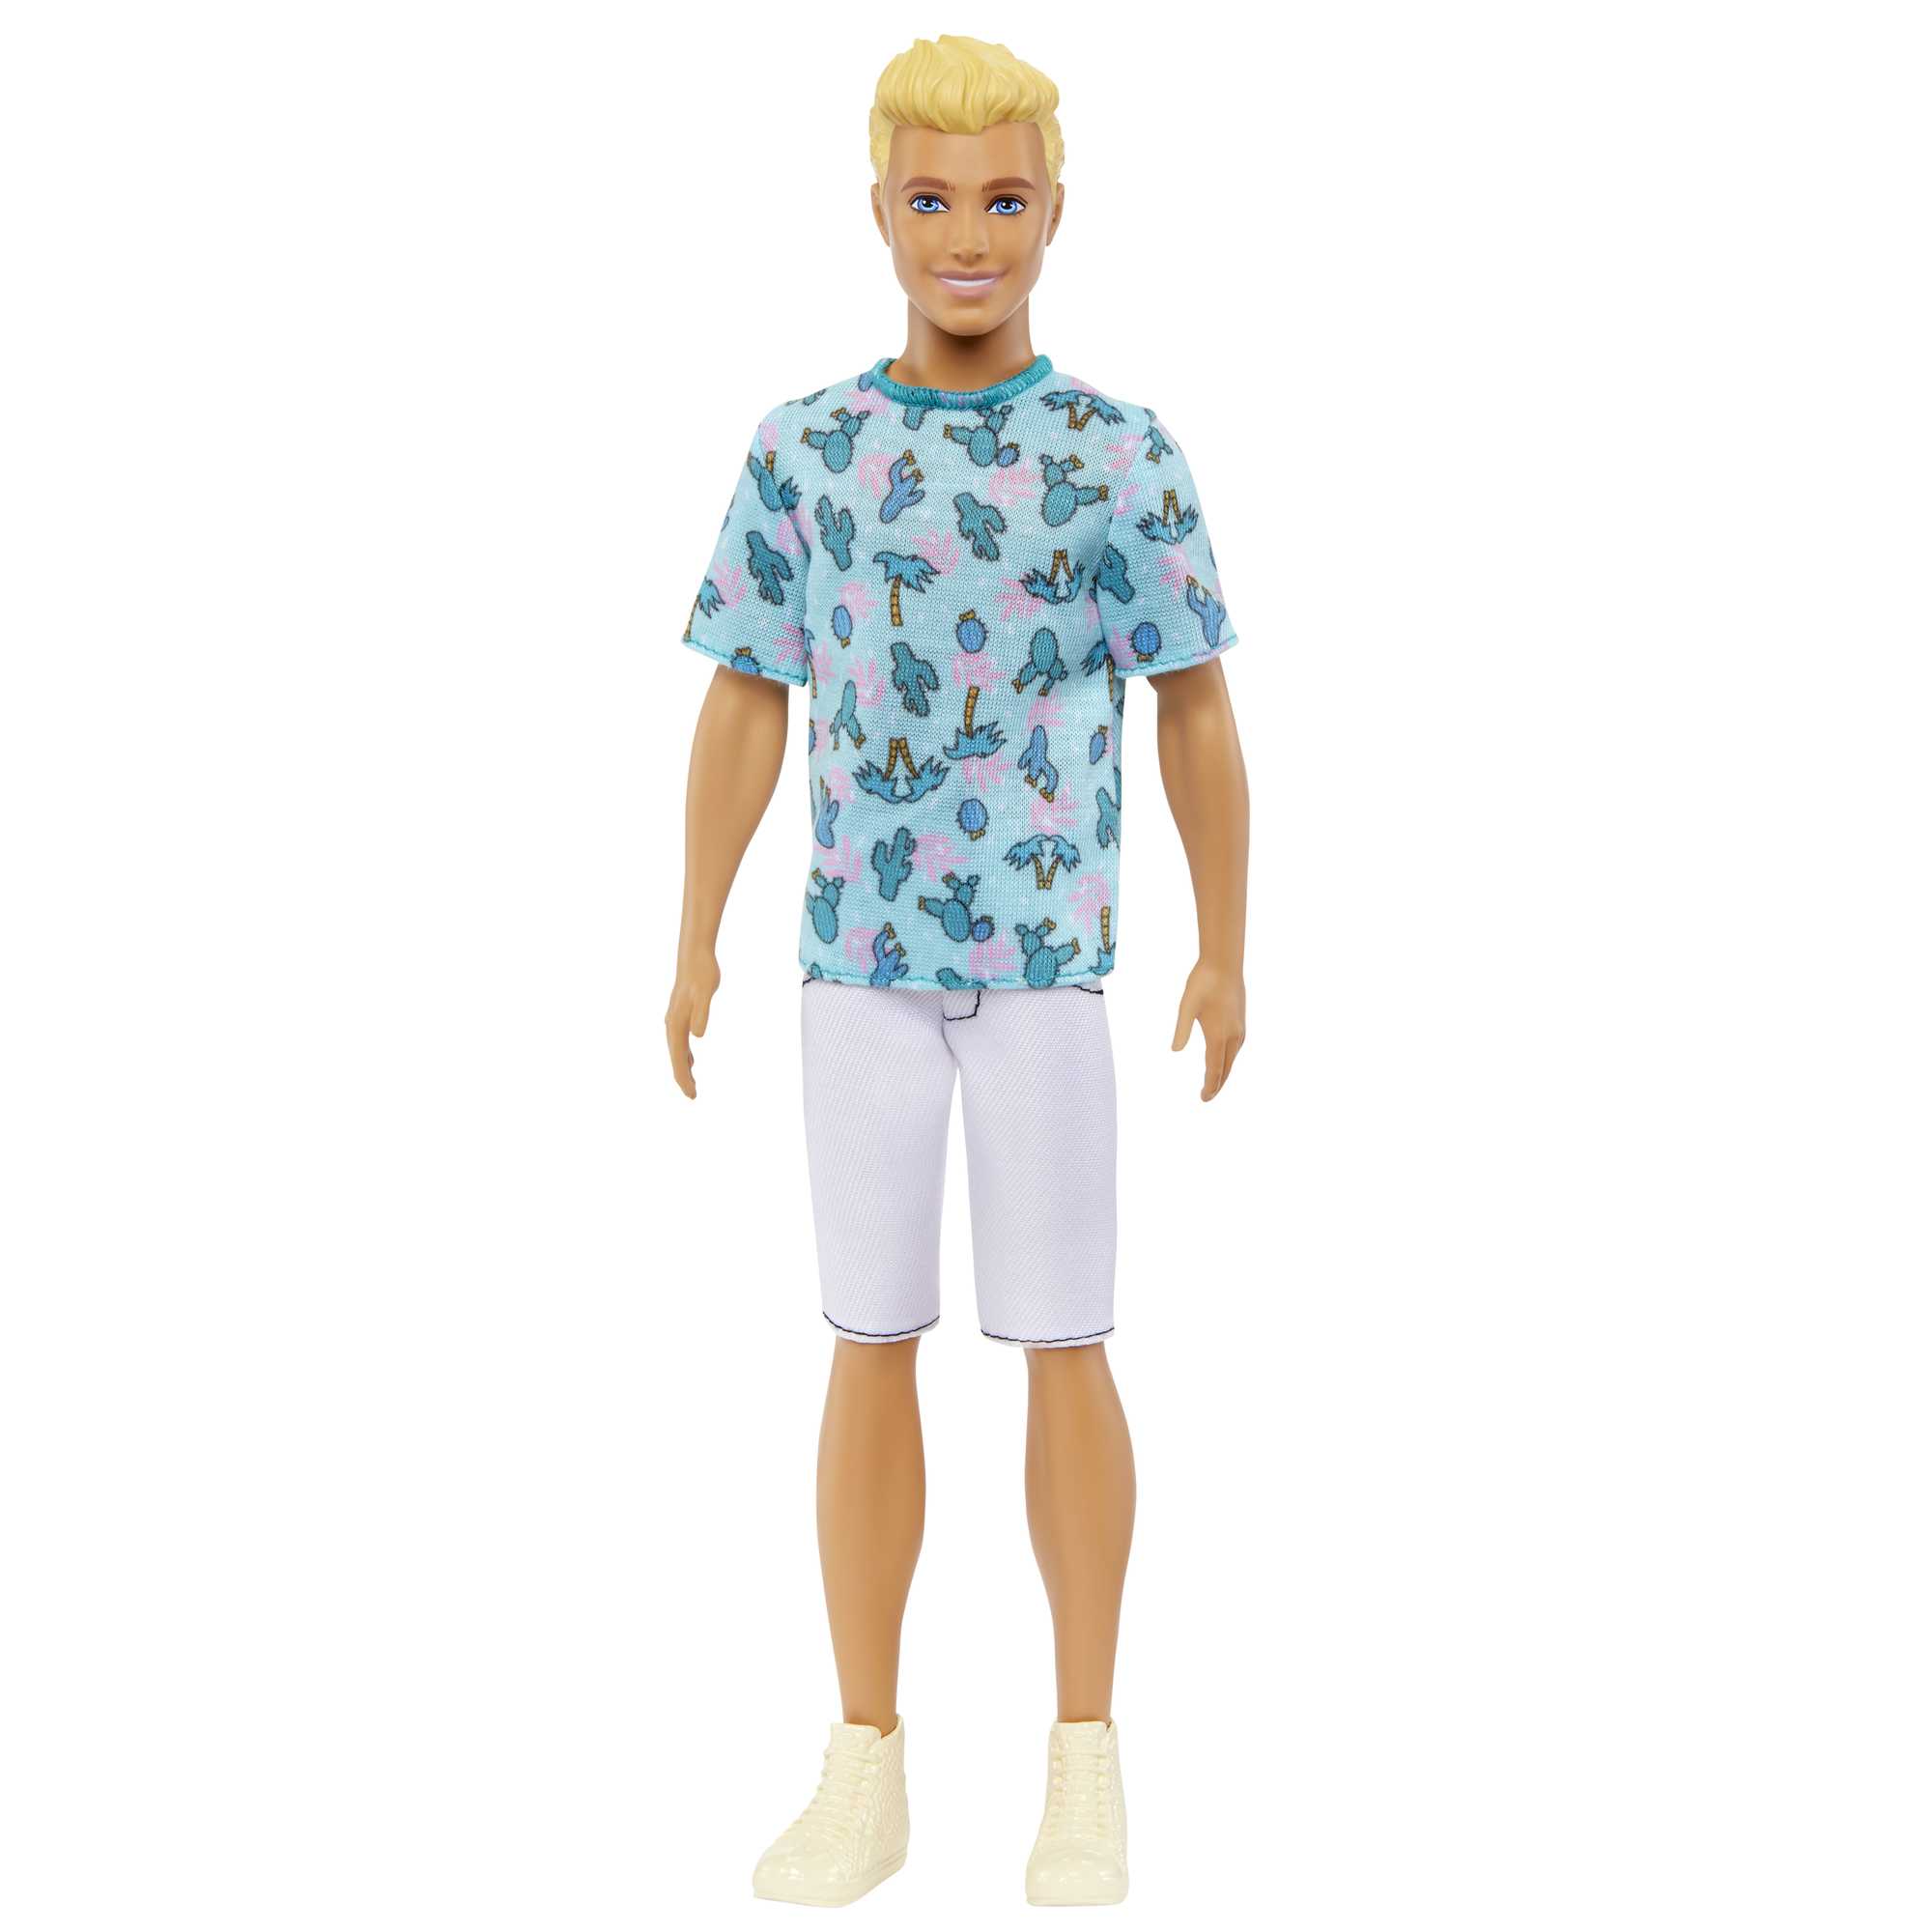 Ken Doll with Cactus Tee | Barbie Fashionistas | MATTEL